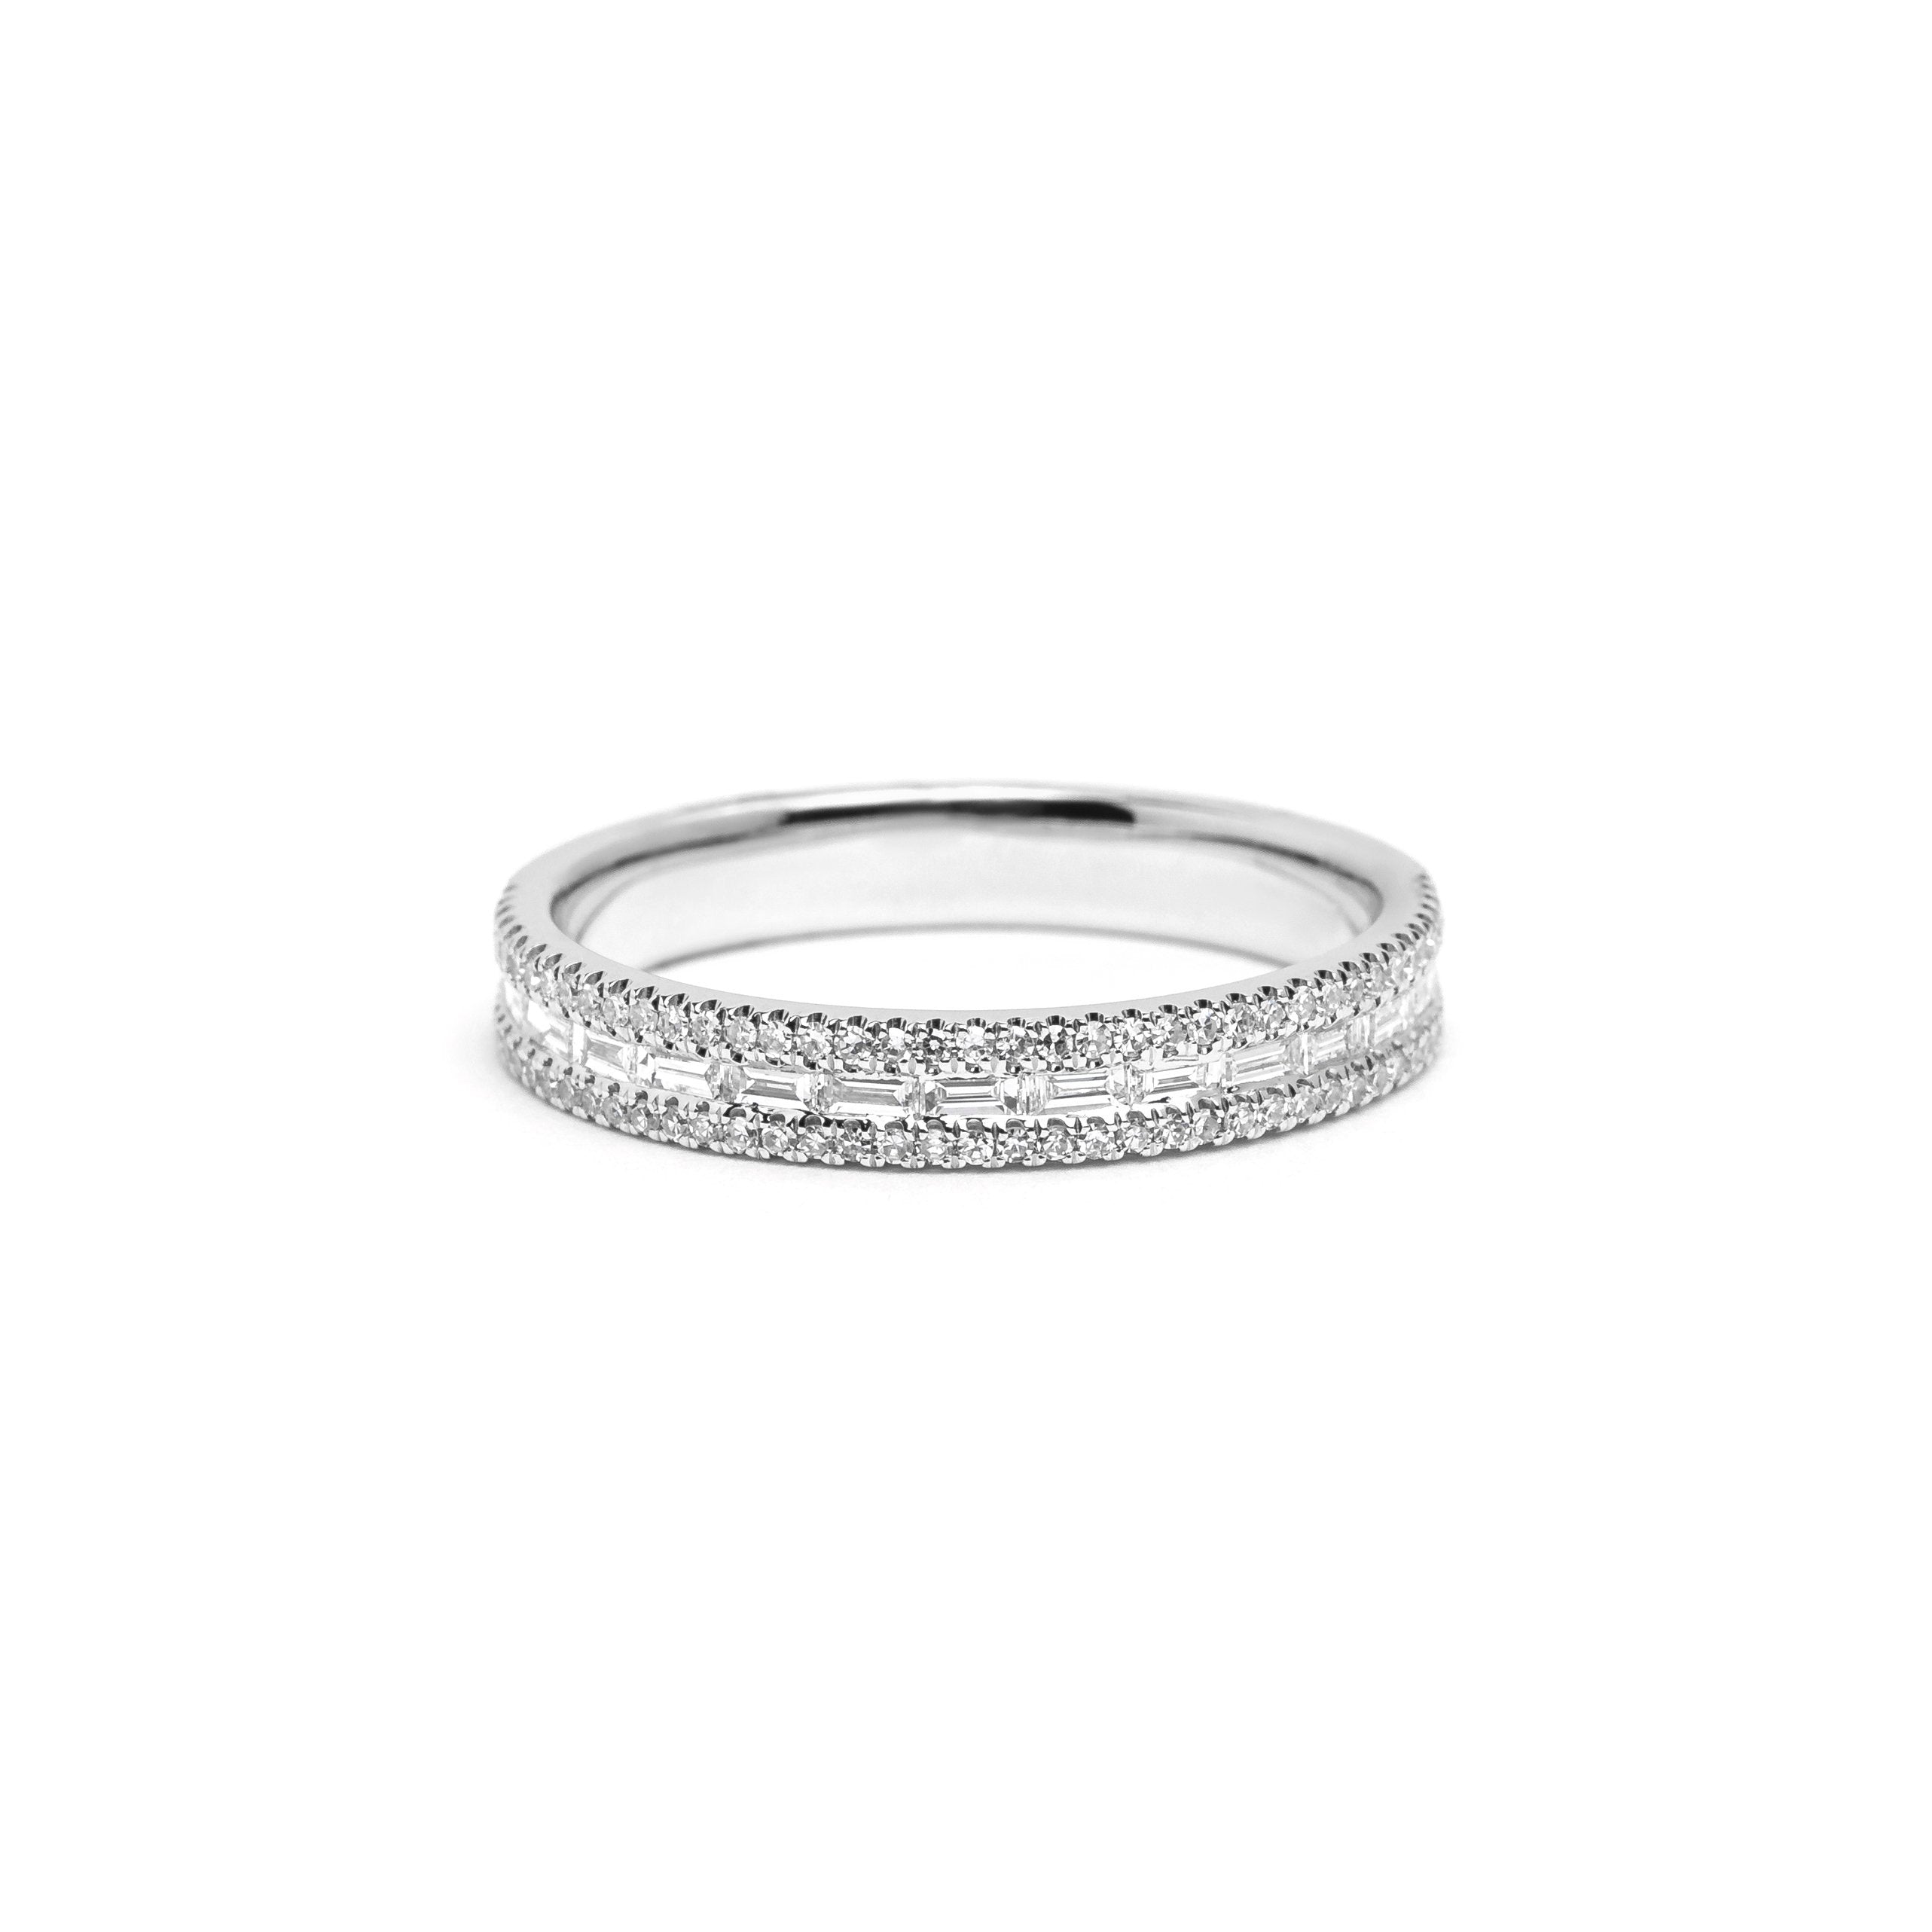 Petite East West Baguette And Pavé Diamond Ring Ring Princess Bride Diamonds 3 14K White Gold 